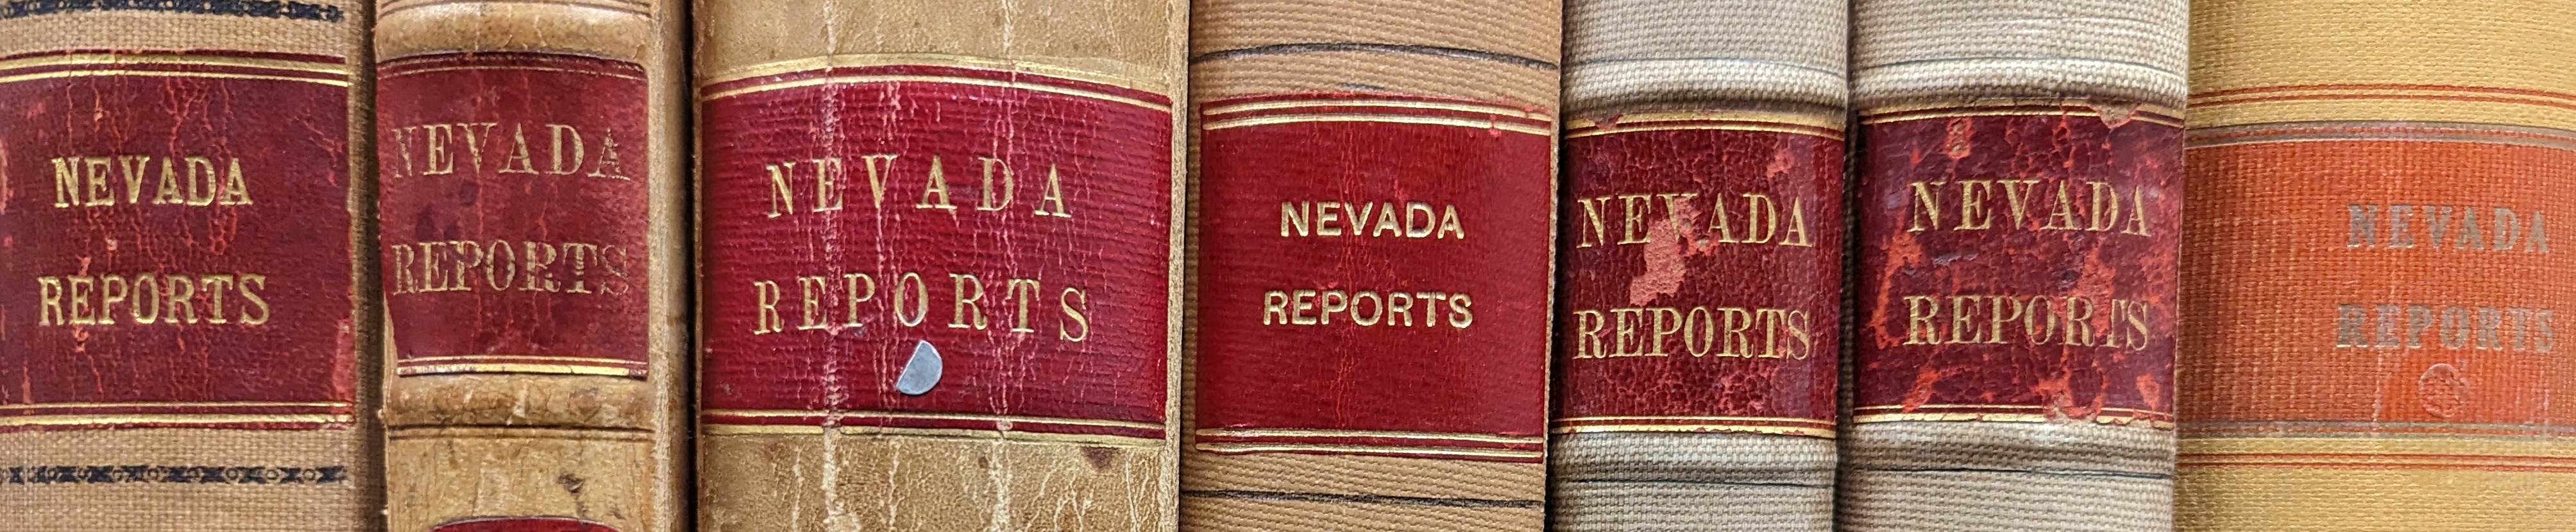 Nevada Reports